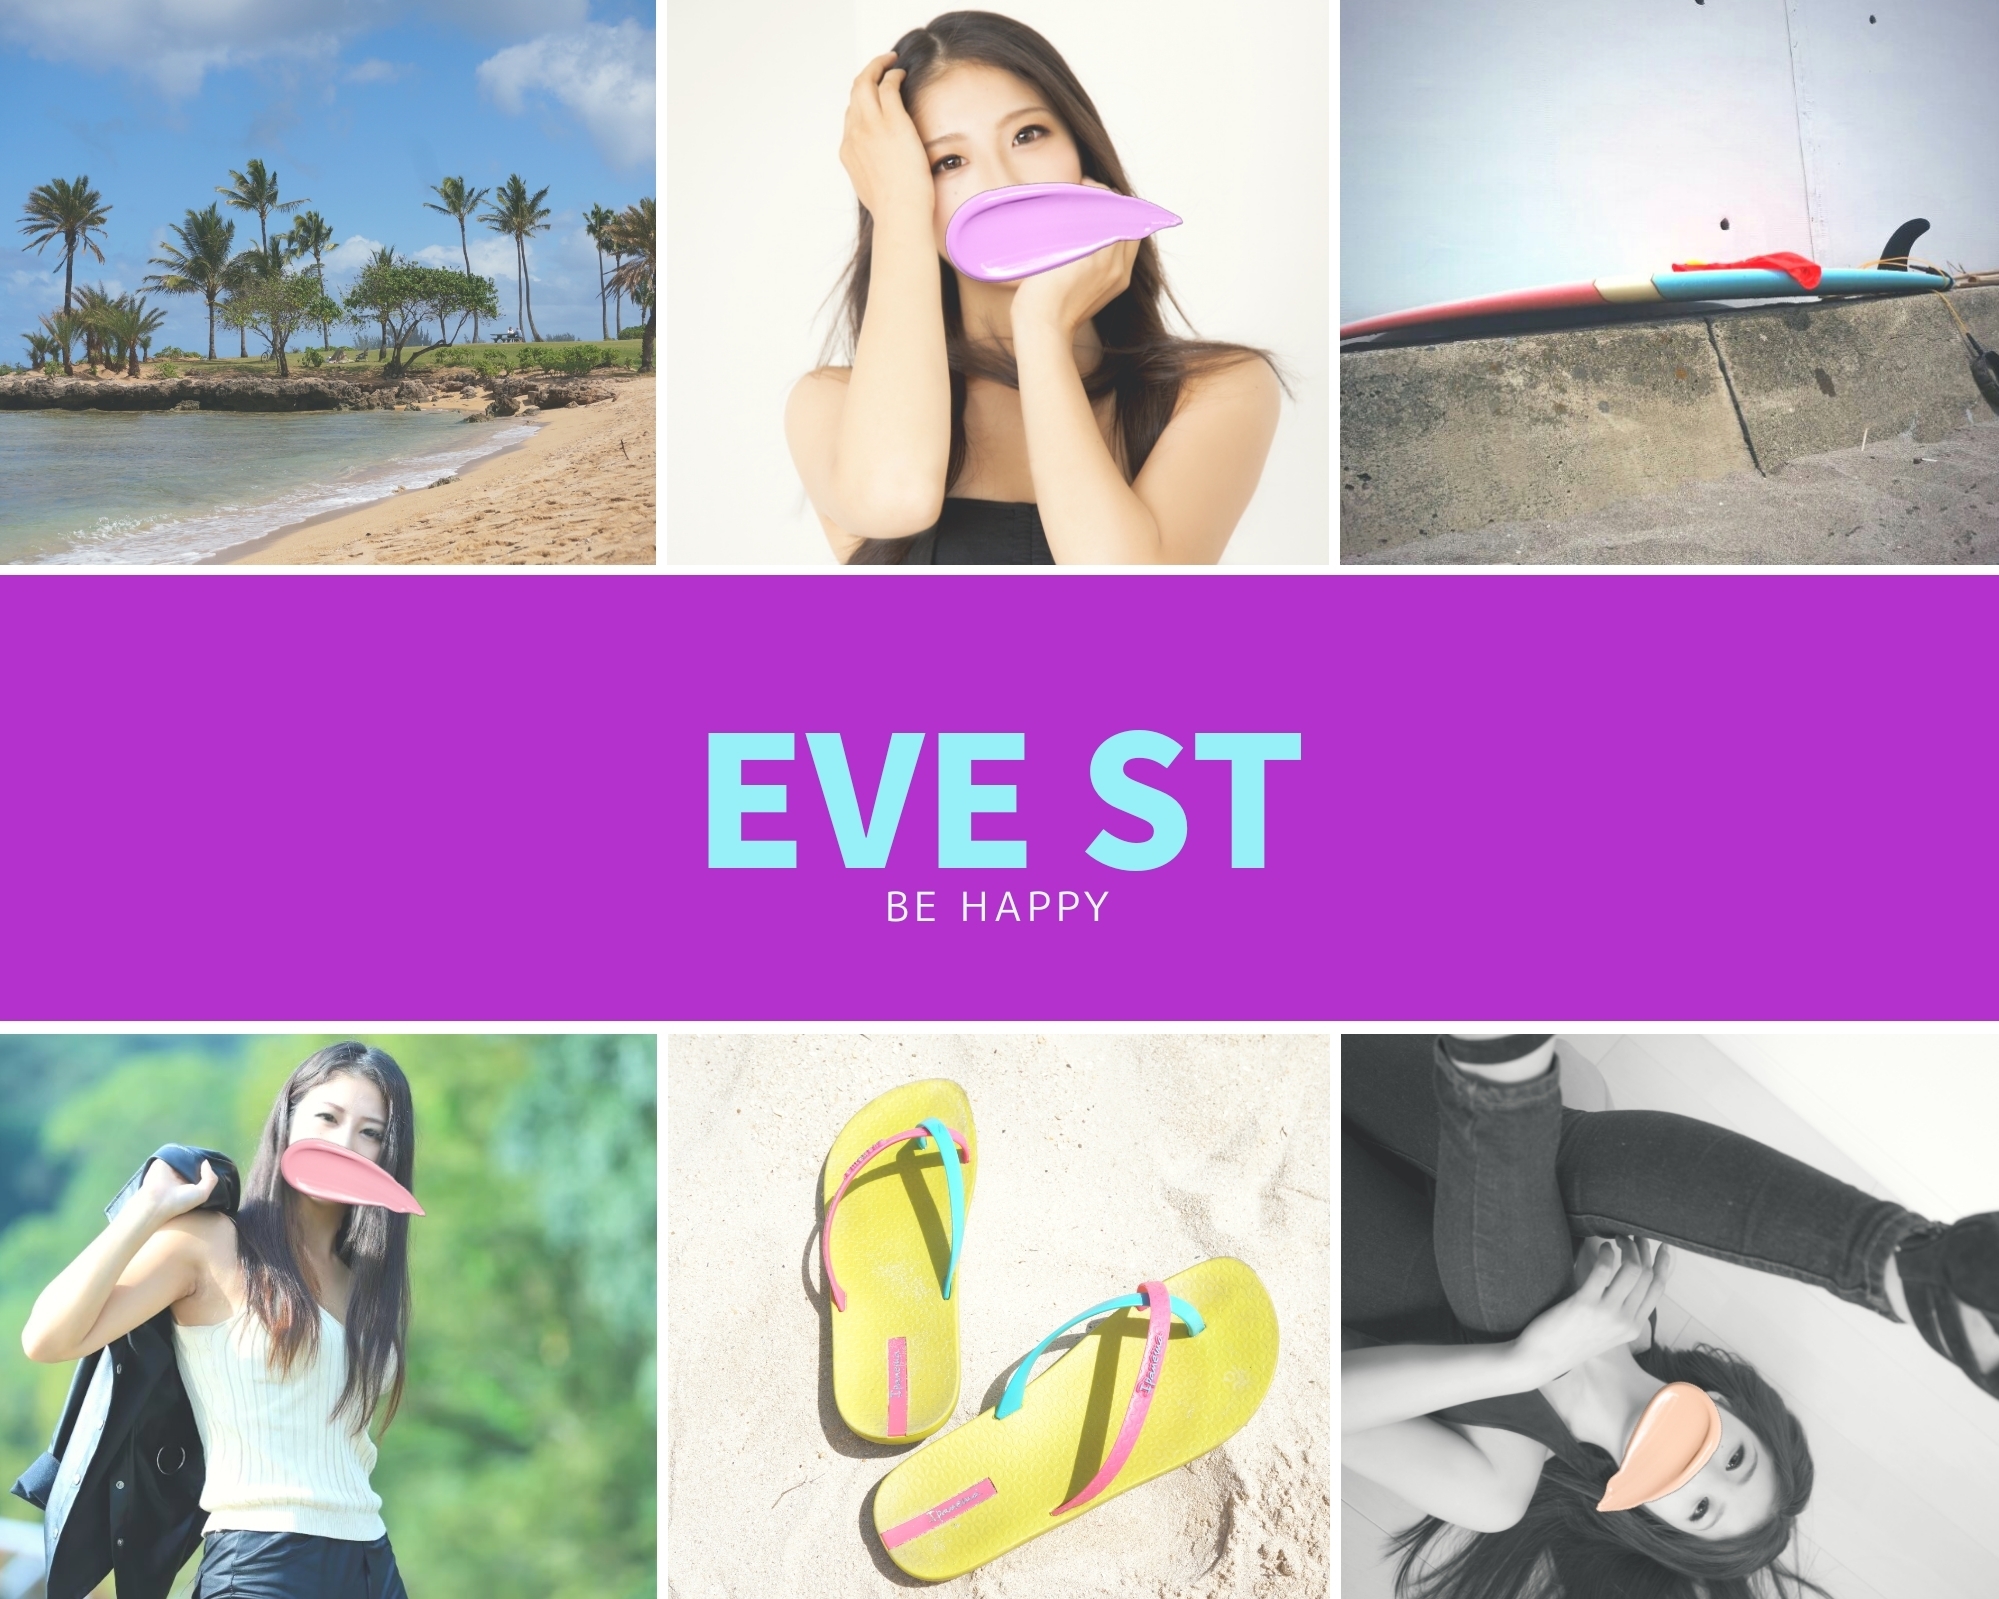 Eve St